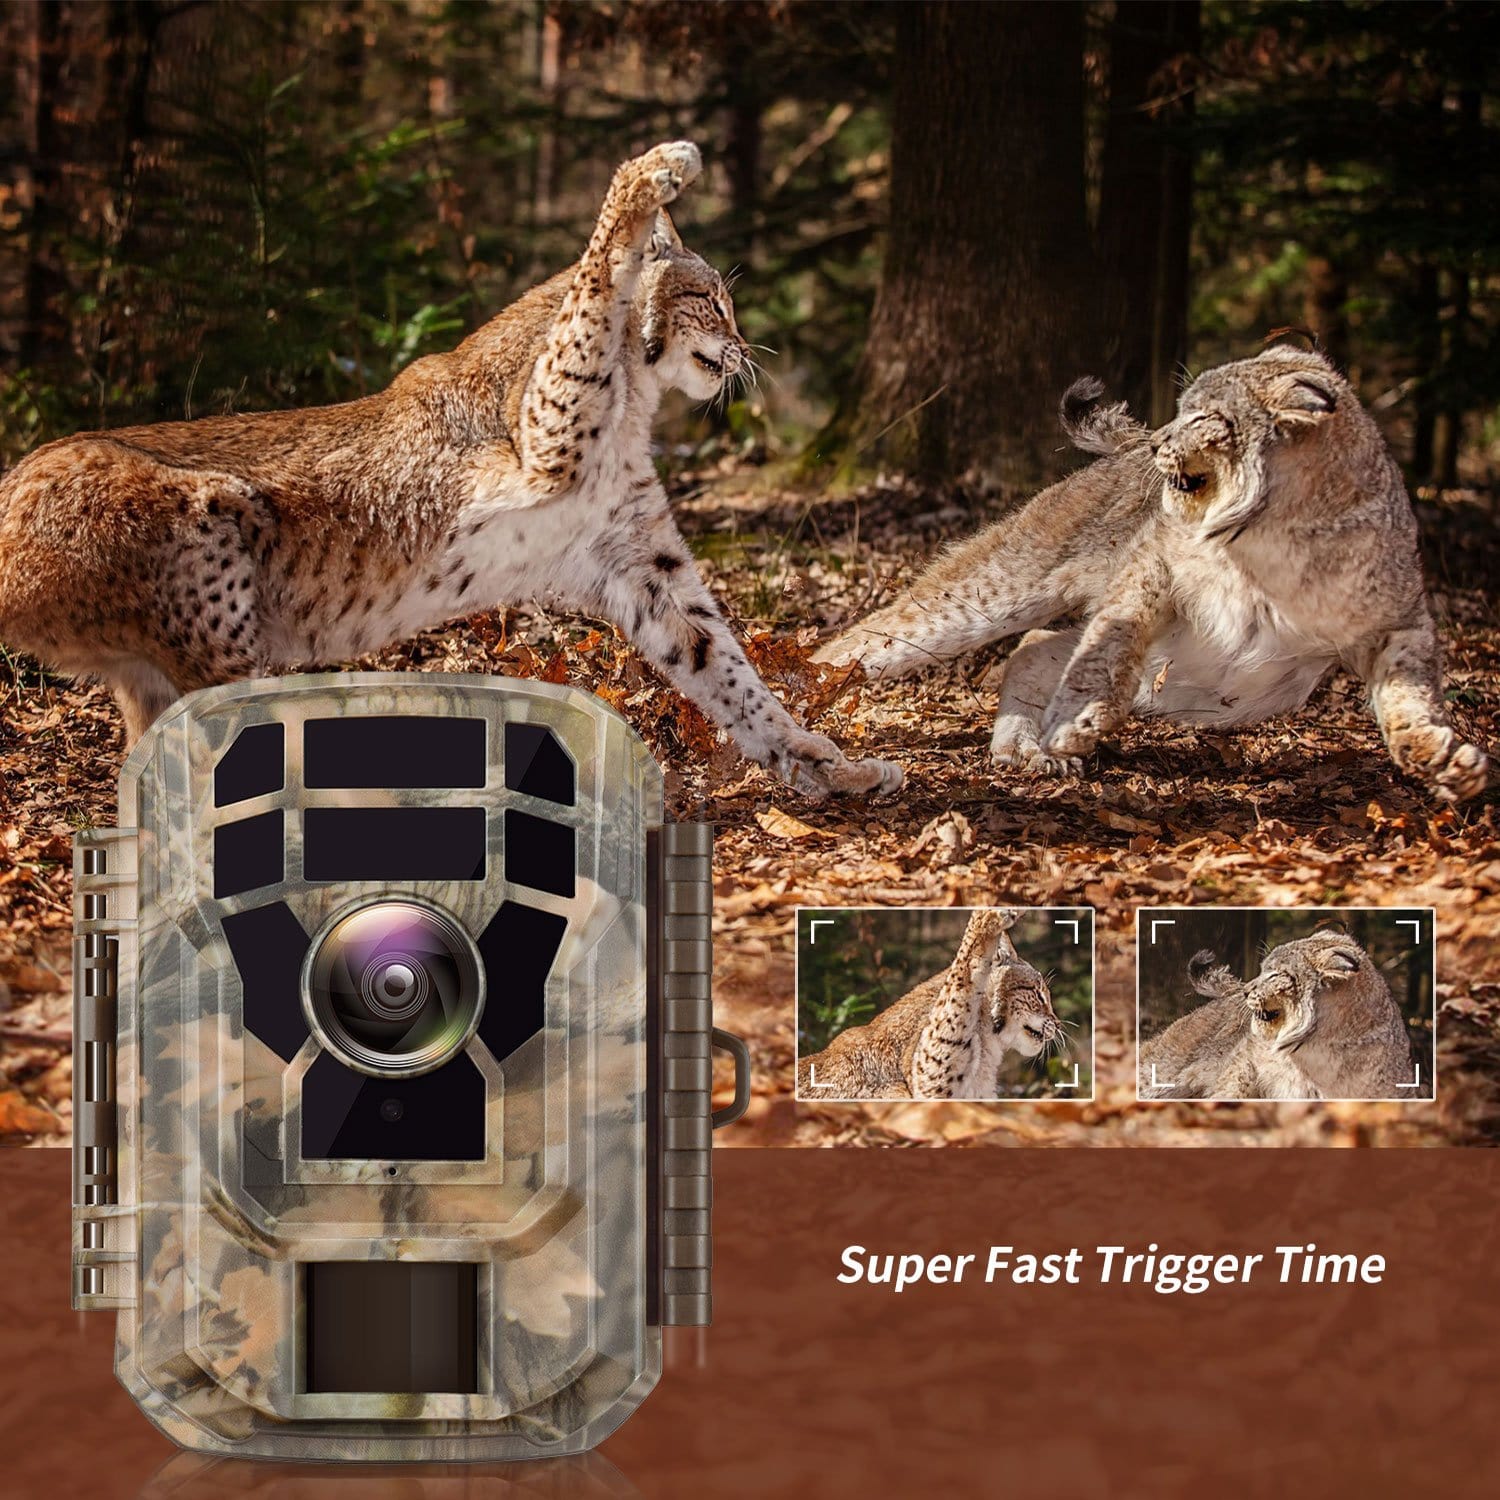 Campark T20 Trail Camera has super fast trigger time